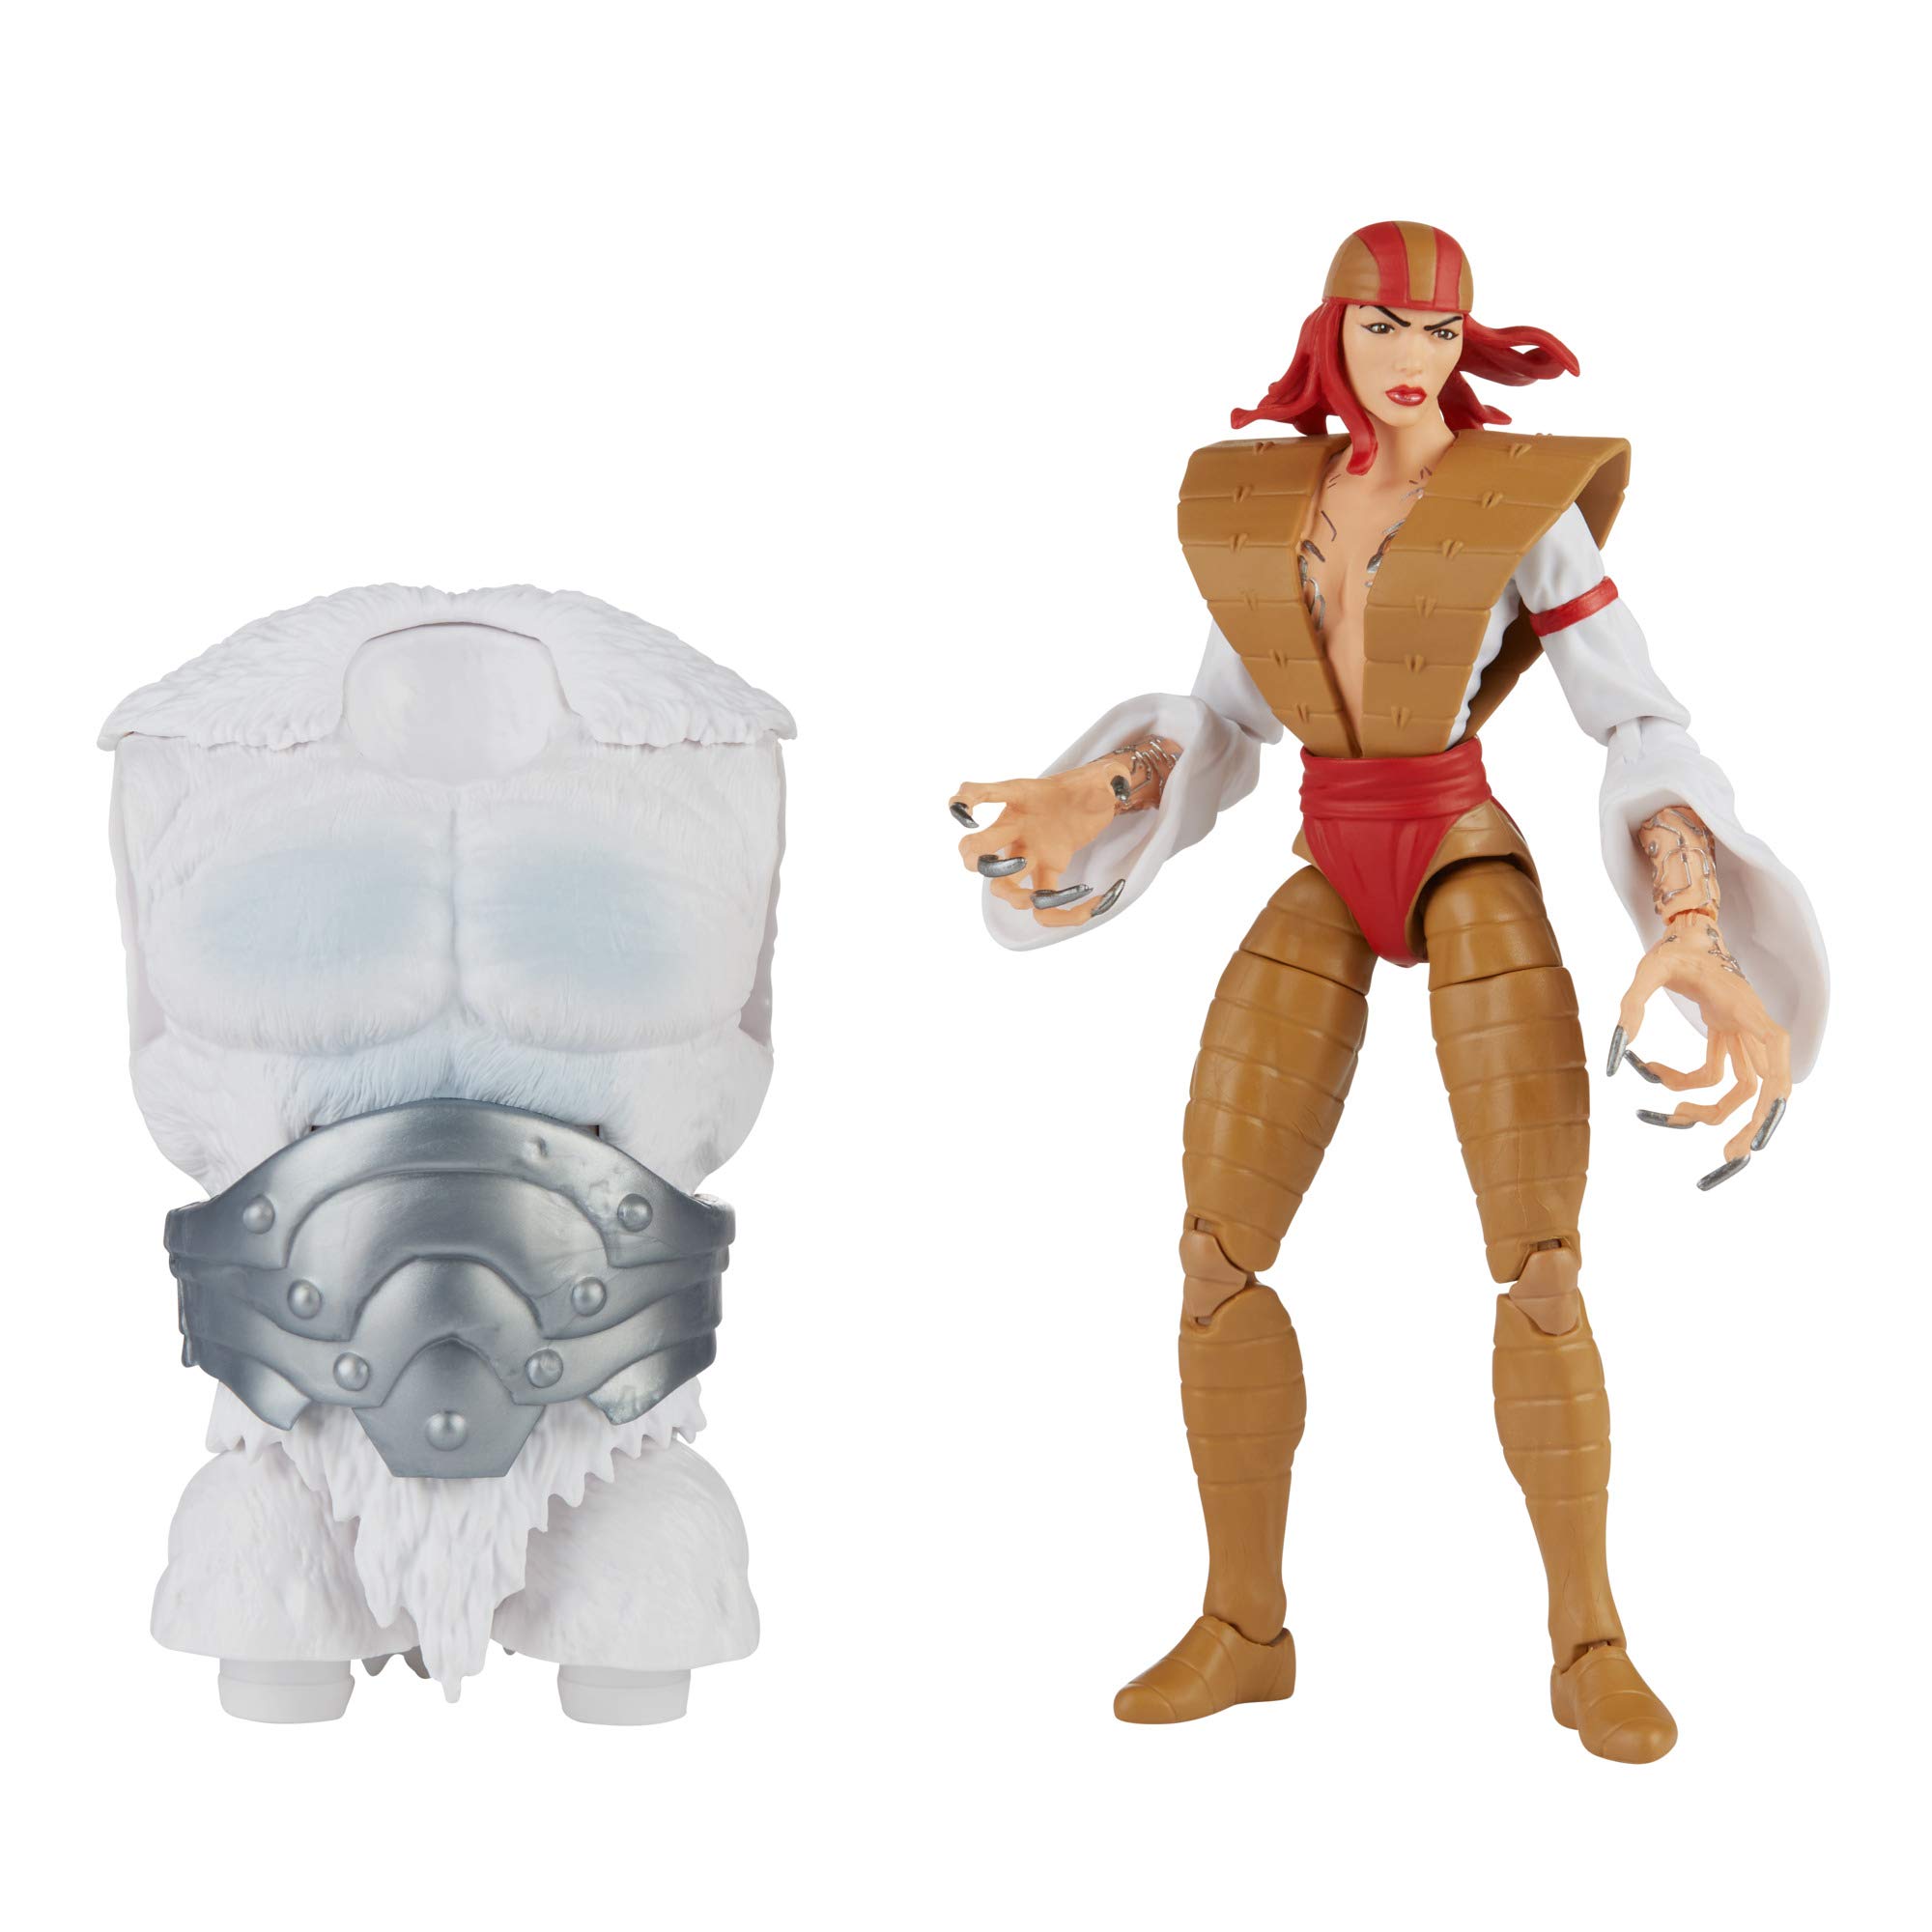 Marvel Hasbro Legends Series 6-inch Collectible Lady Deathstrike Action Figure, Includes 1 Build-A-Figure Part(s), Premium Design